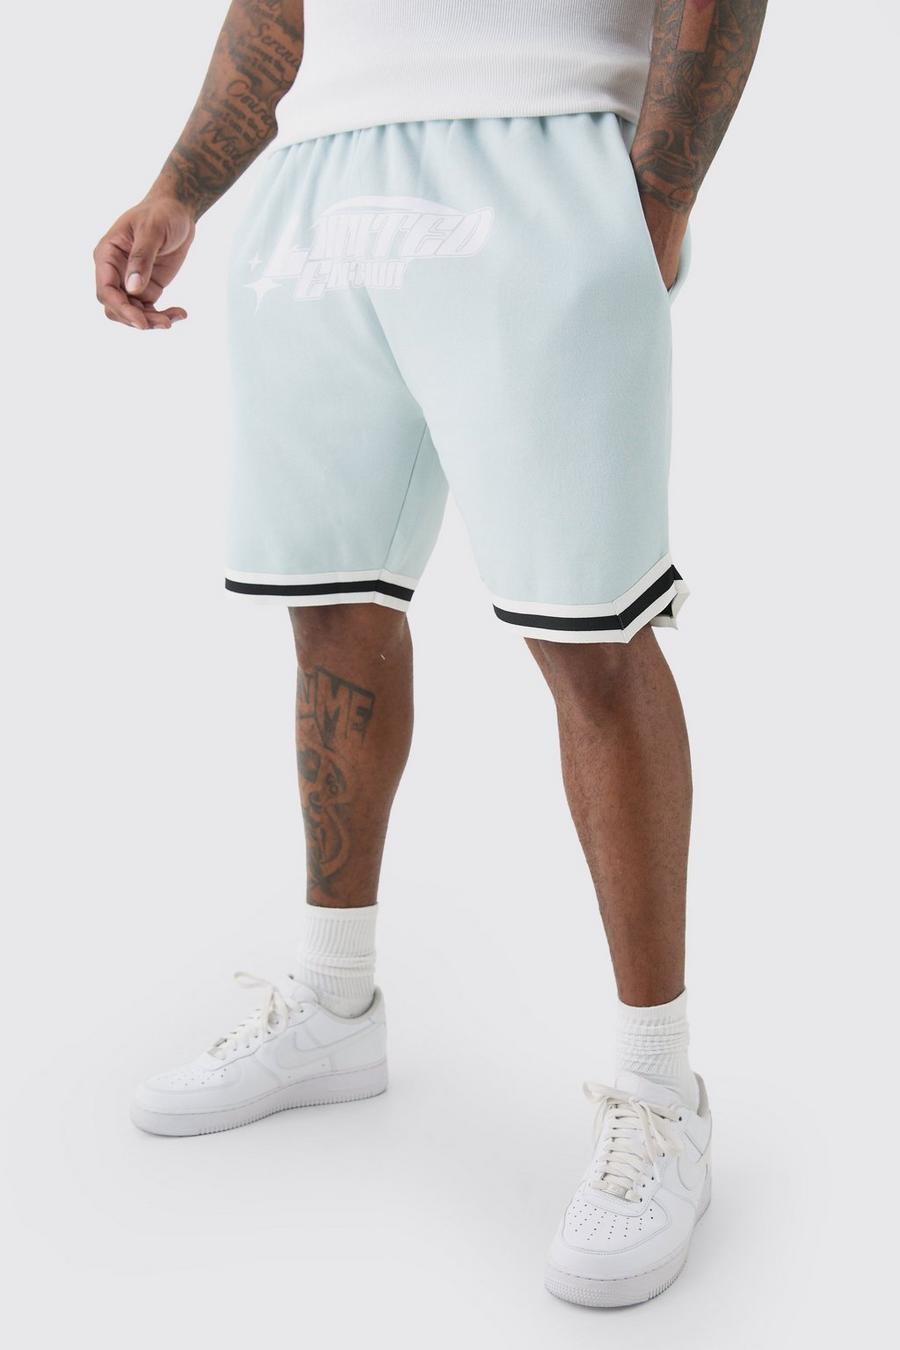 Pantalón corto Plus holgado de baloncesto en azul claro Limited, Light blue